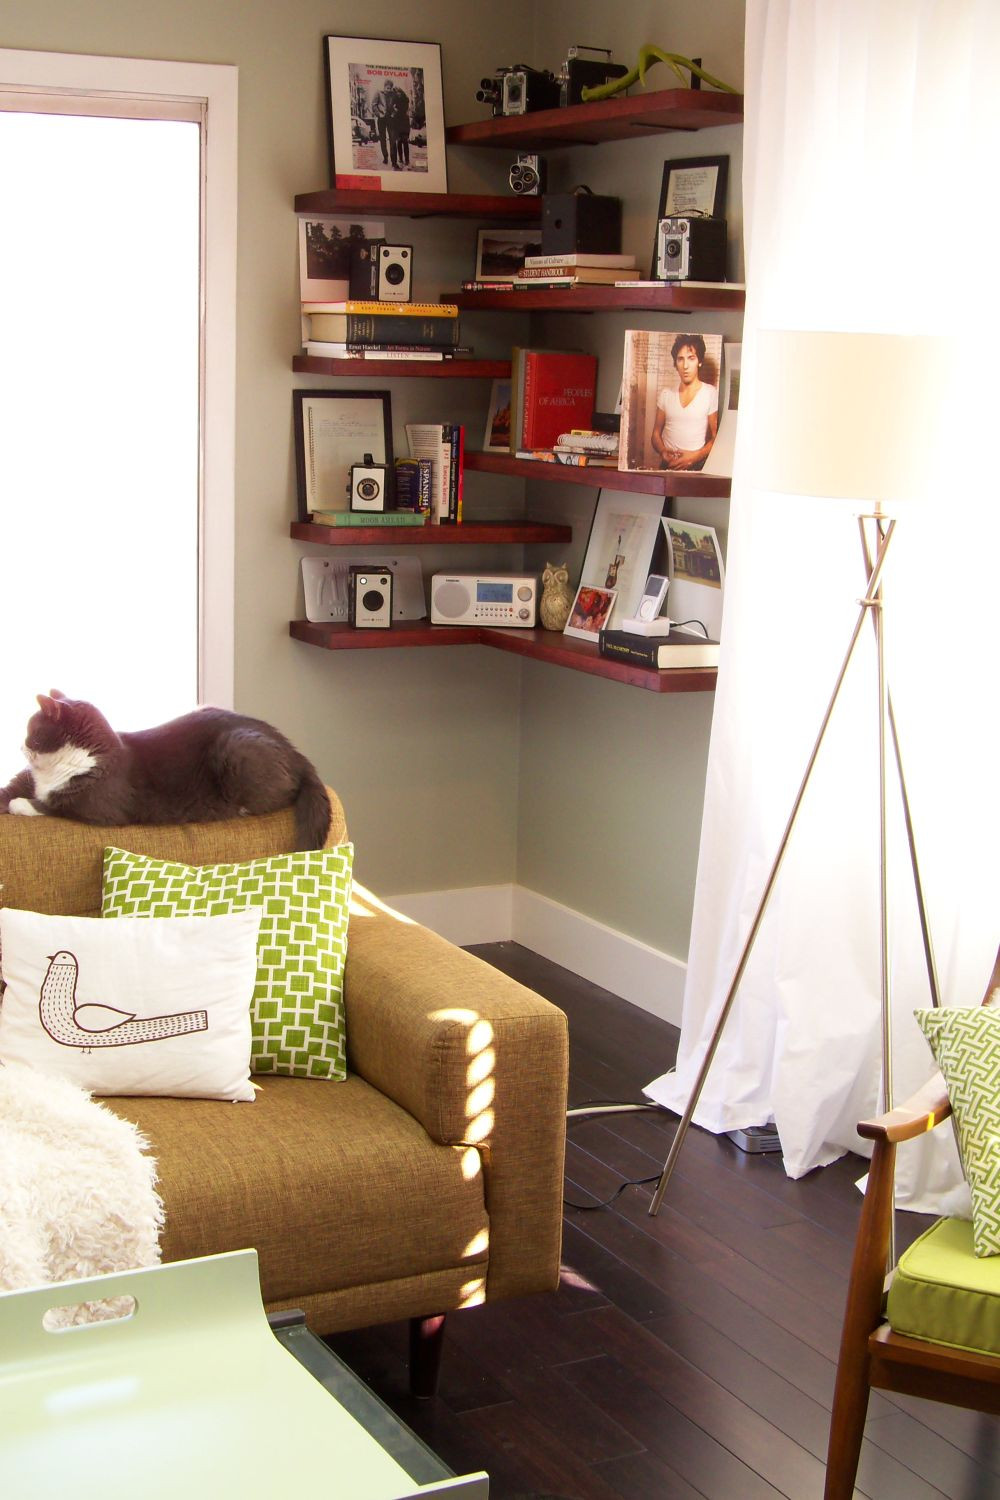 Best ideas about DIY Corner Shelf
. Save or Pin 15 Ways to DIY Creative Corner Shelves Now.